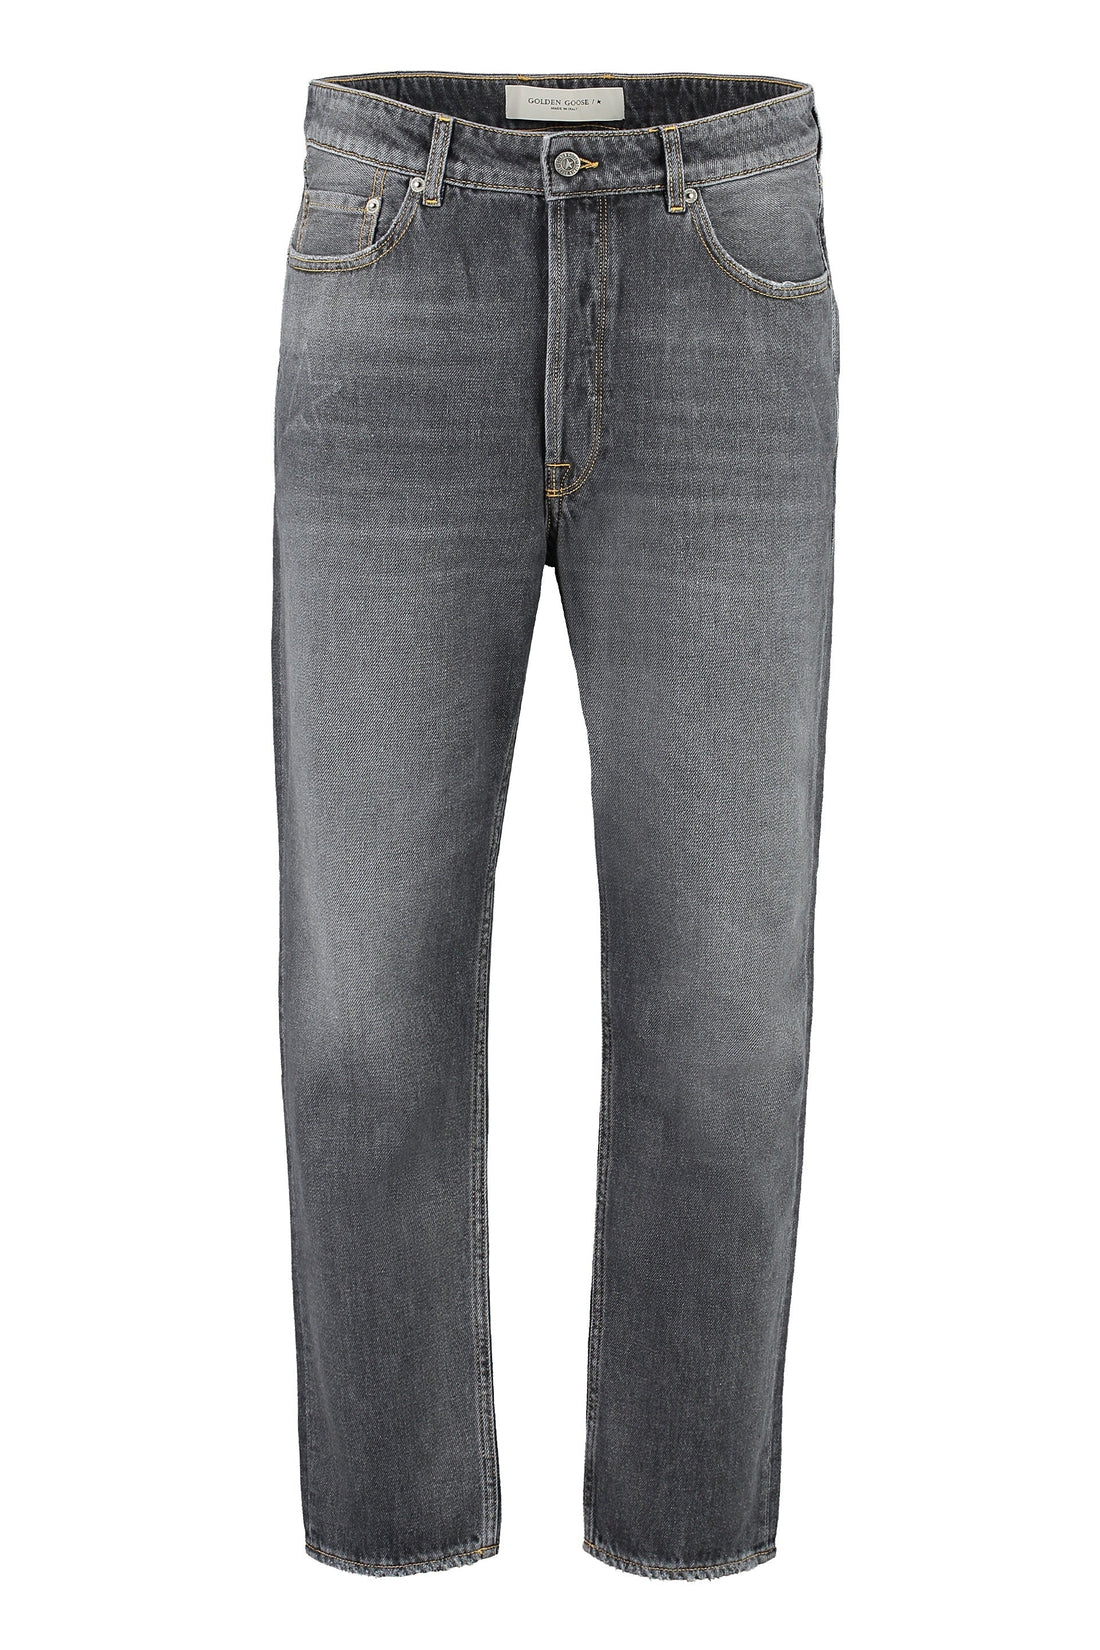 Golden Goose-OUTLET-SALE-5-pocket straight-leg jeans-ARCHIVIST